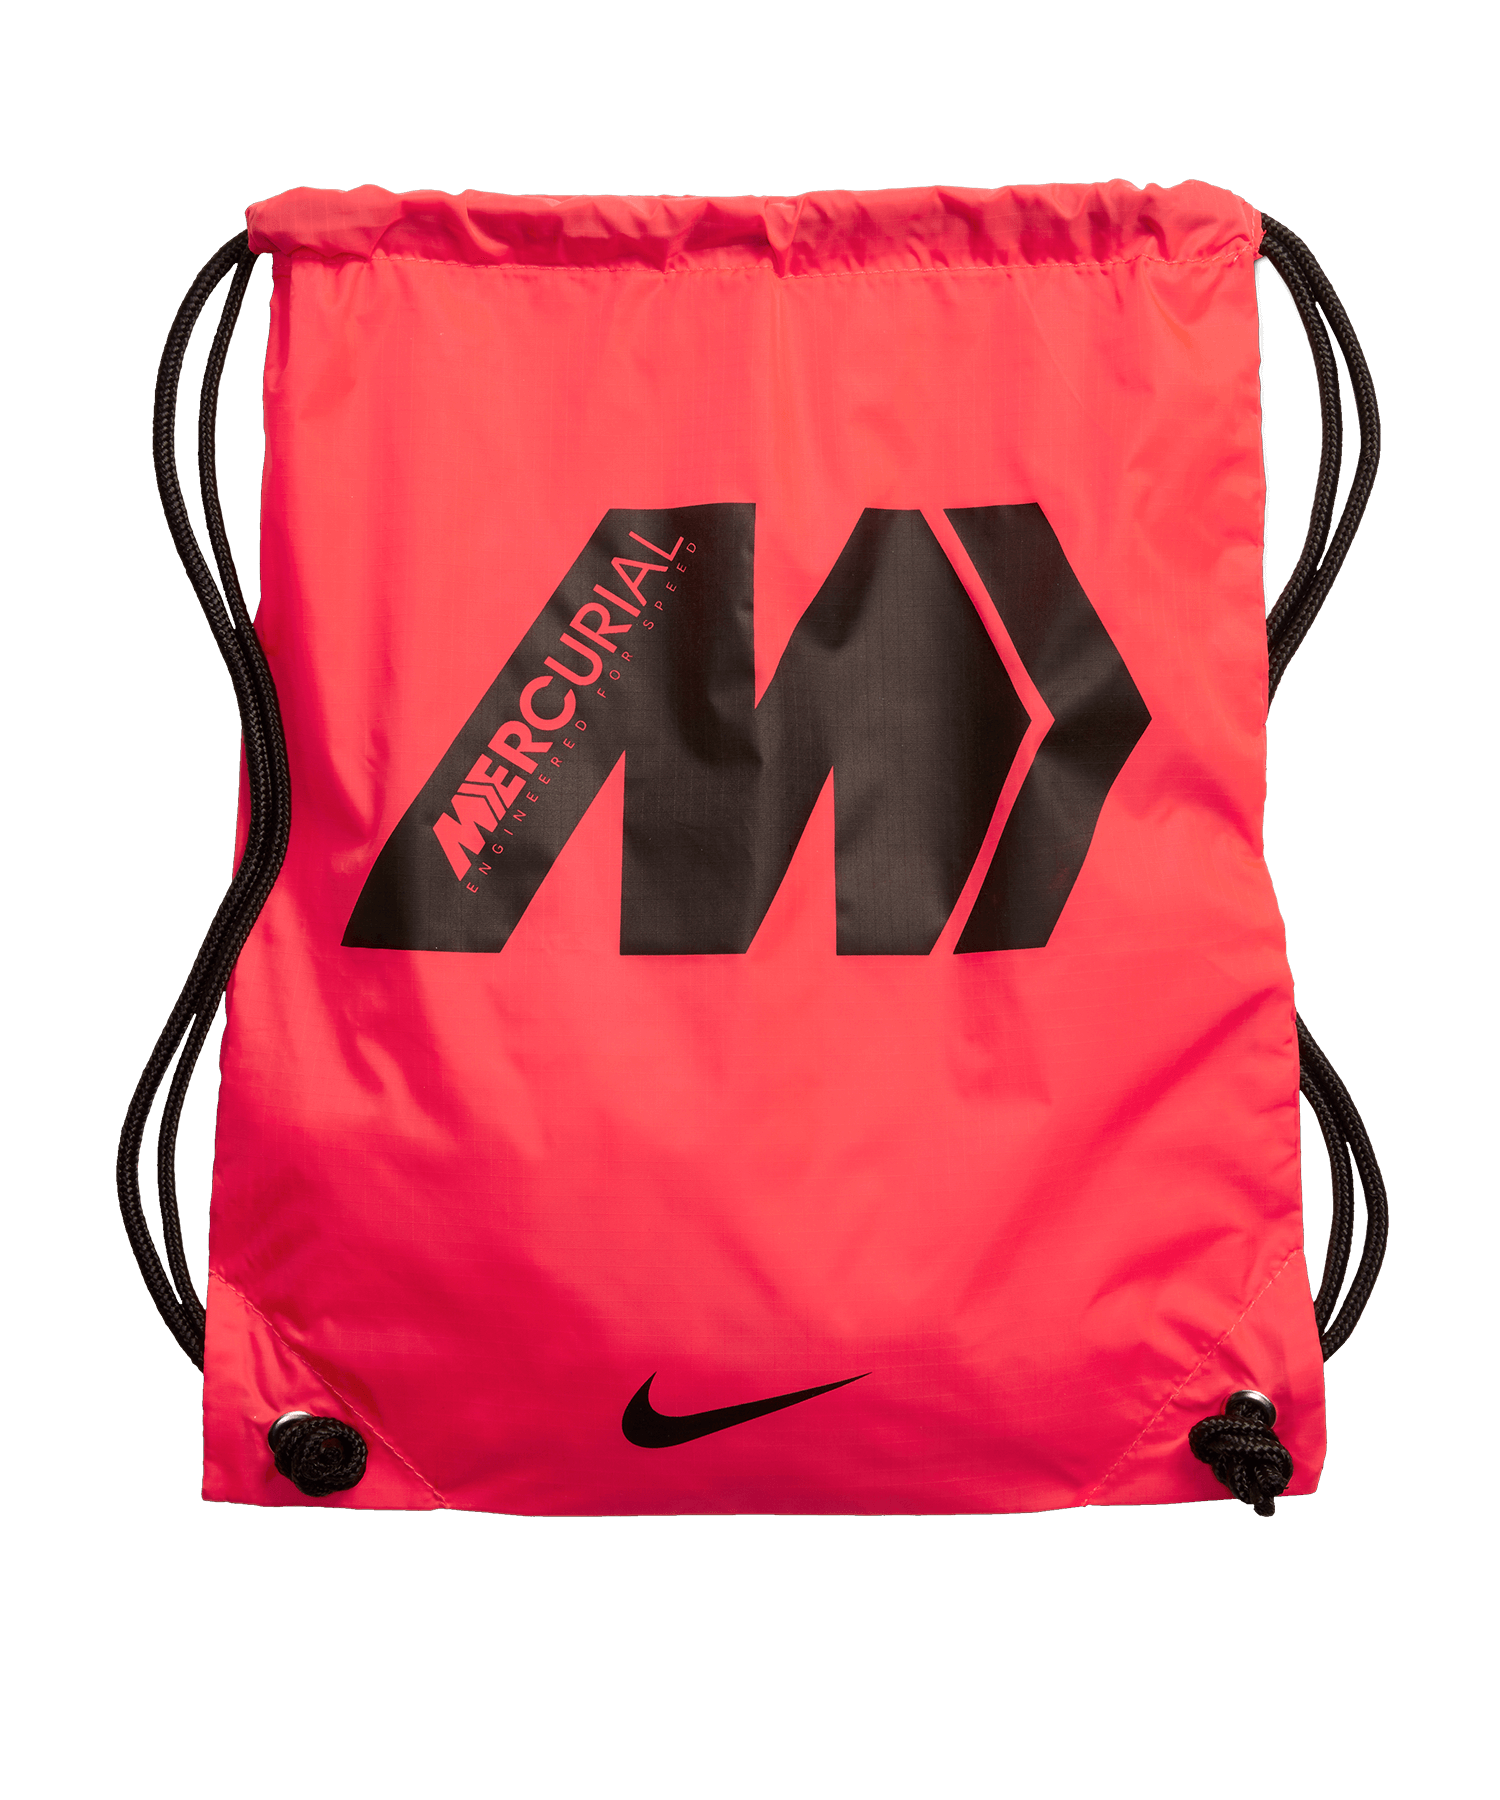 Nike Mercurial Superfly 7 Pro FG Men 's Size 13 Soccer.eBay